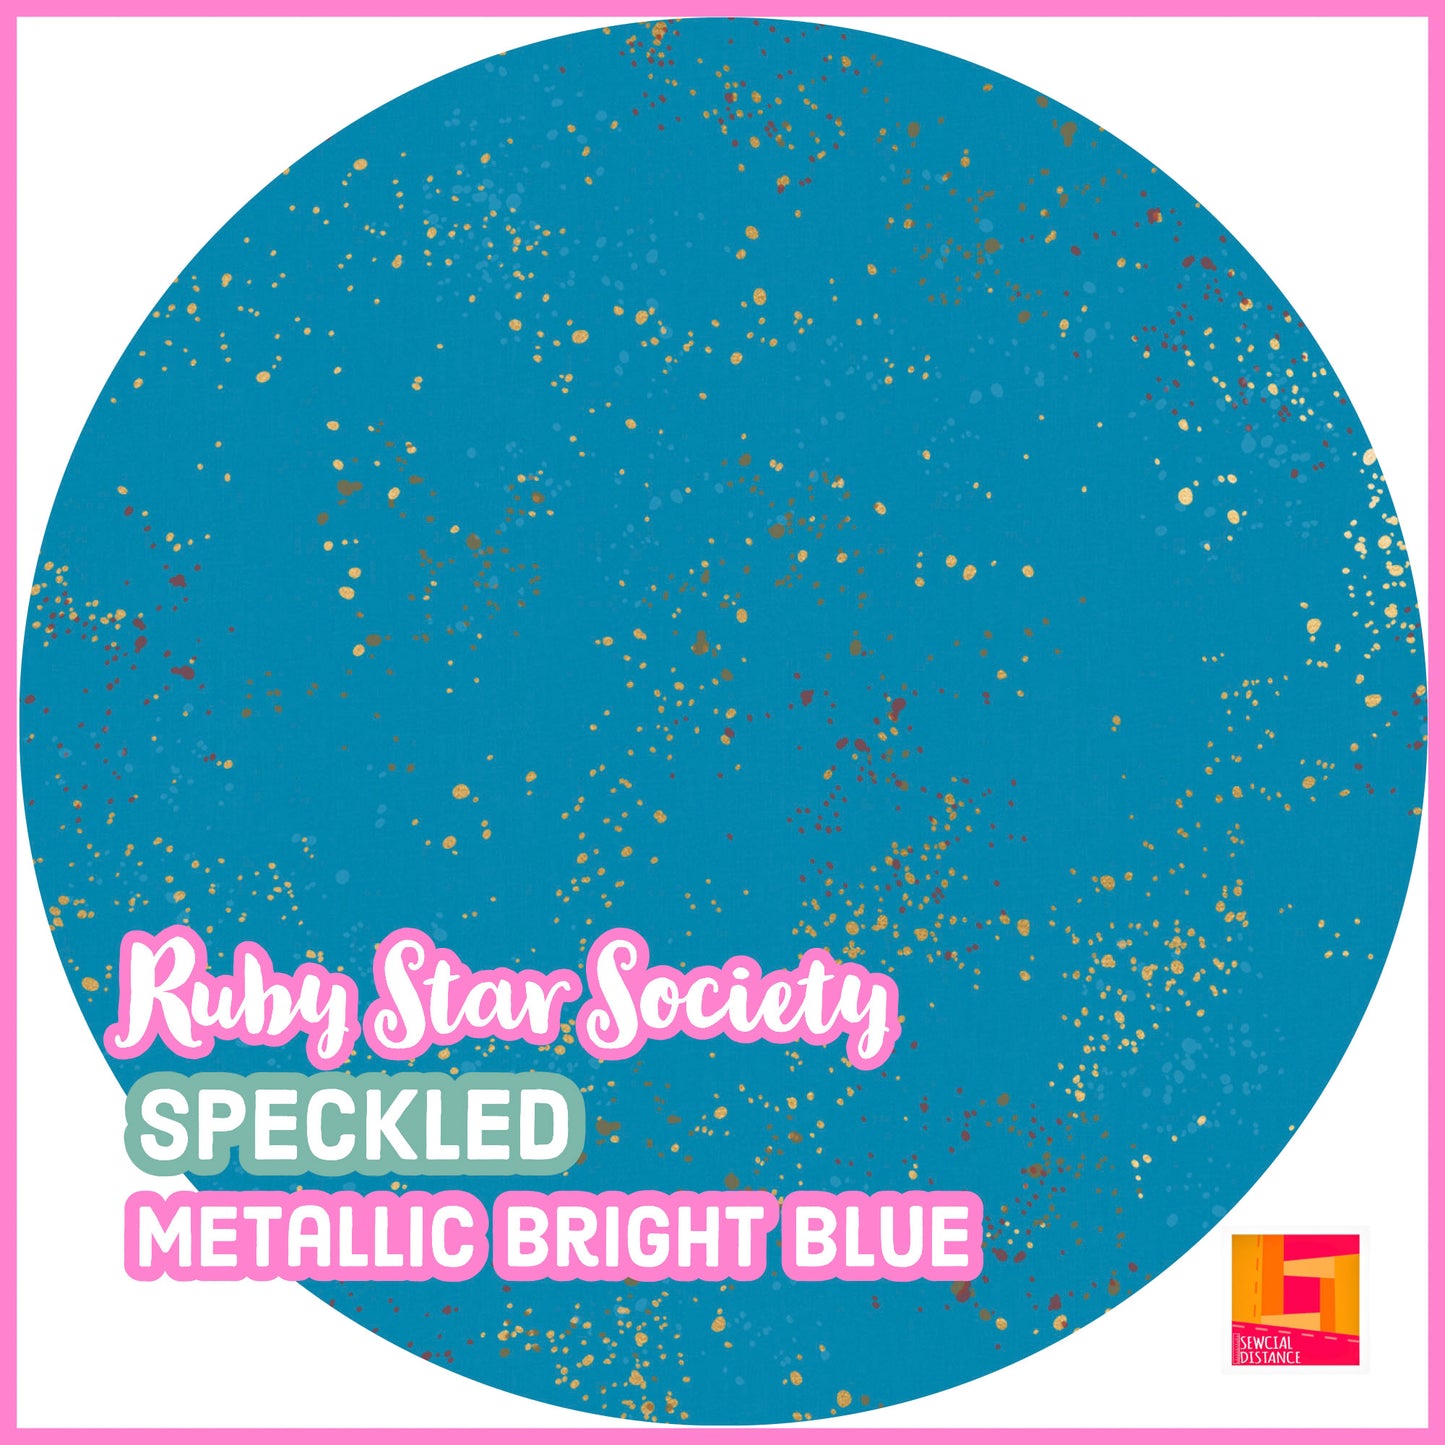 Star Society-Speckled-Metallic Bright Blue